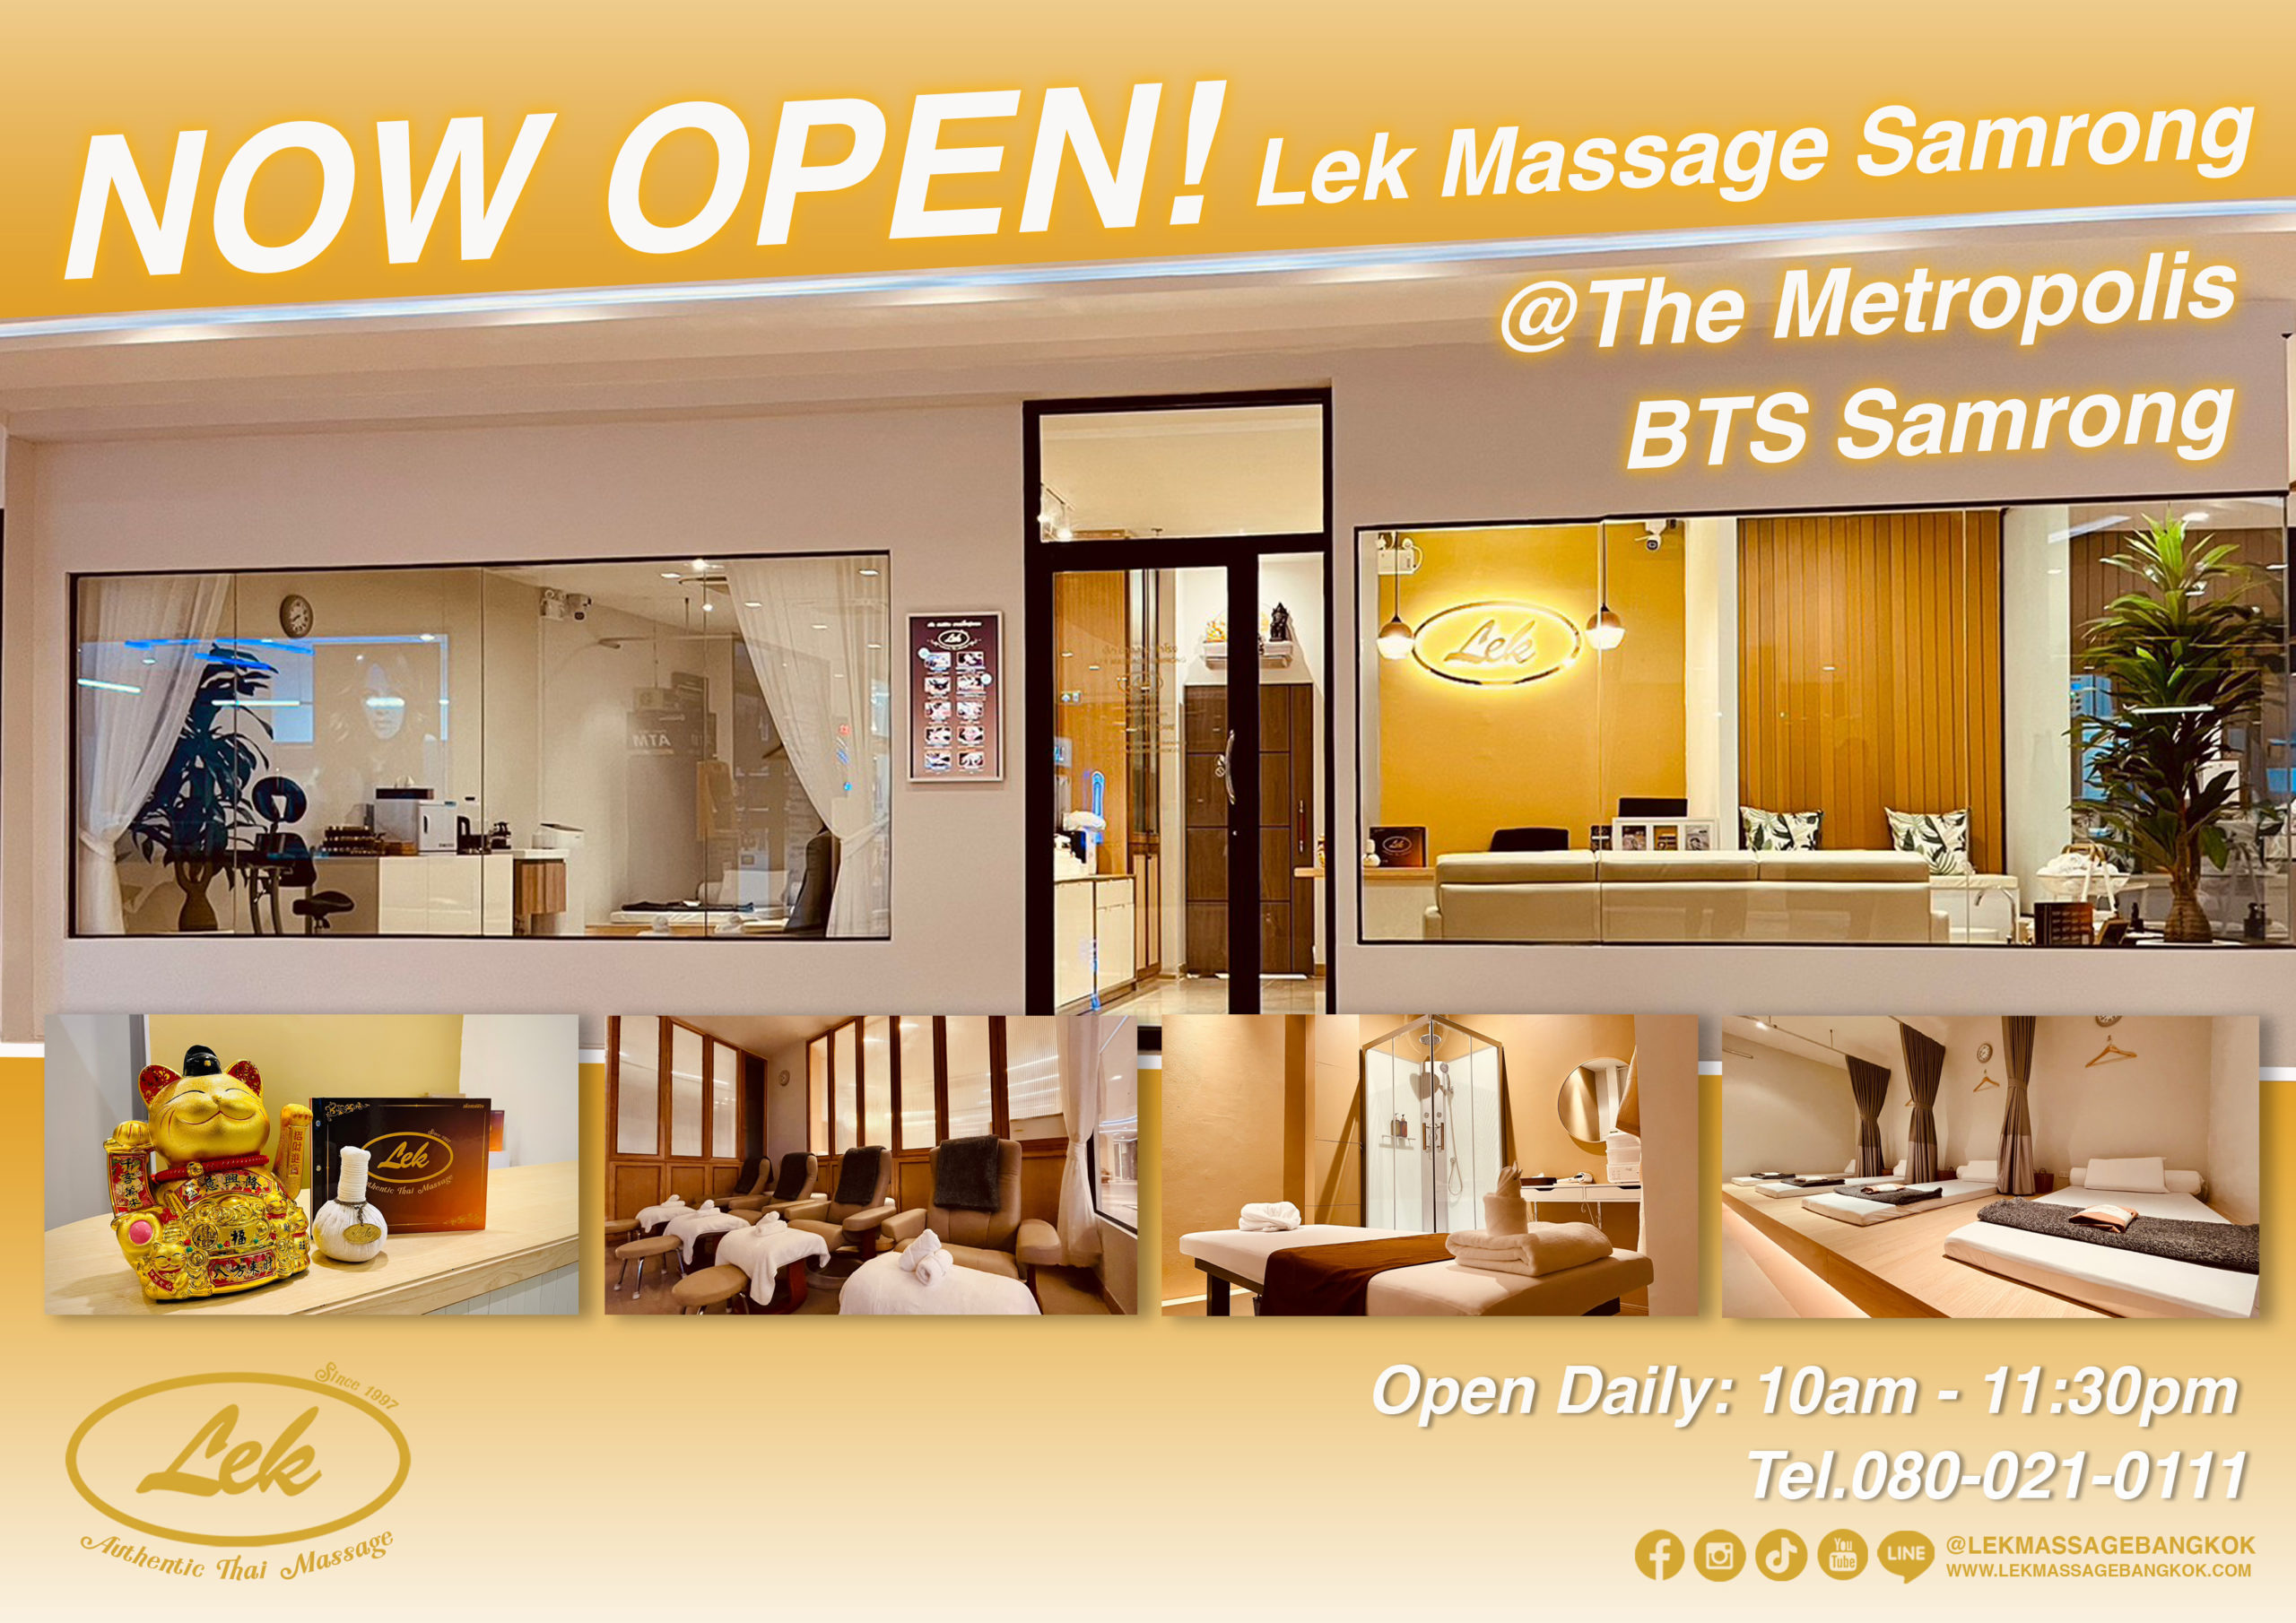 Lek Massage Samrong Now Open!